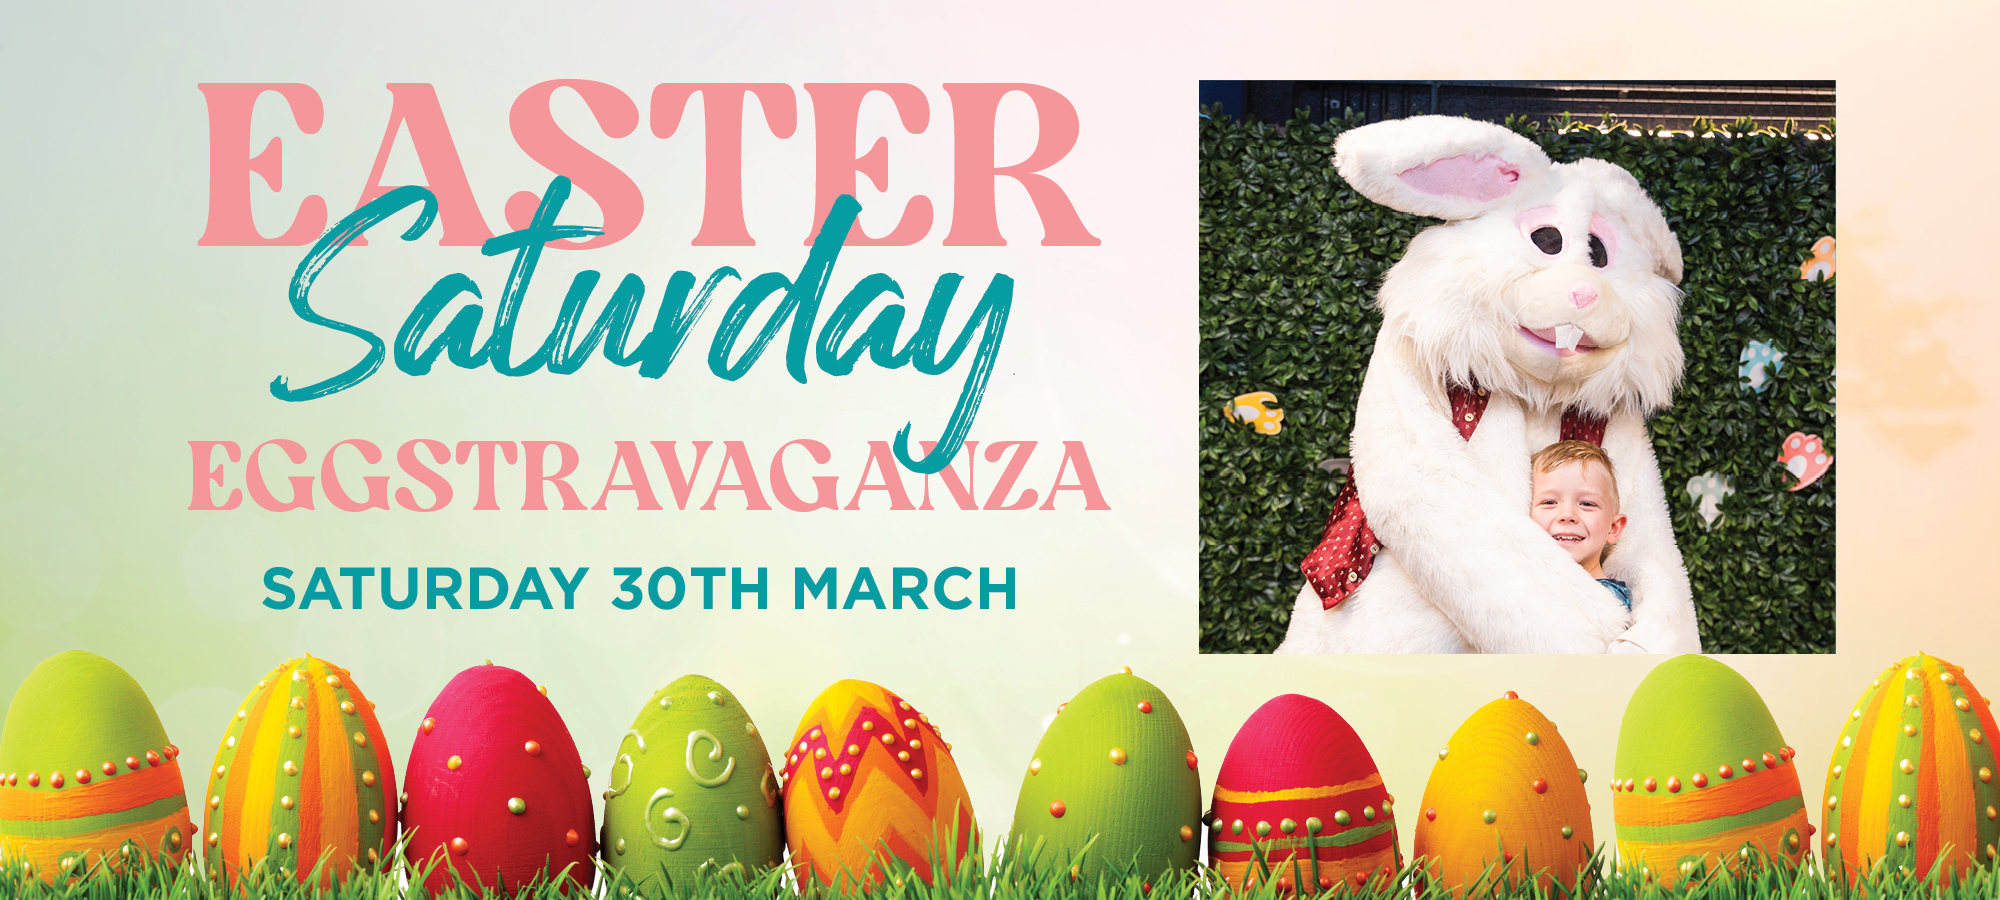 Easter Saturday Eggstravaganza